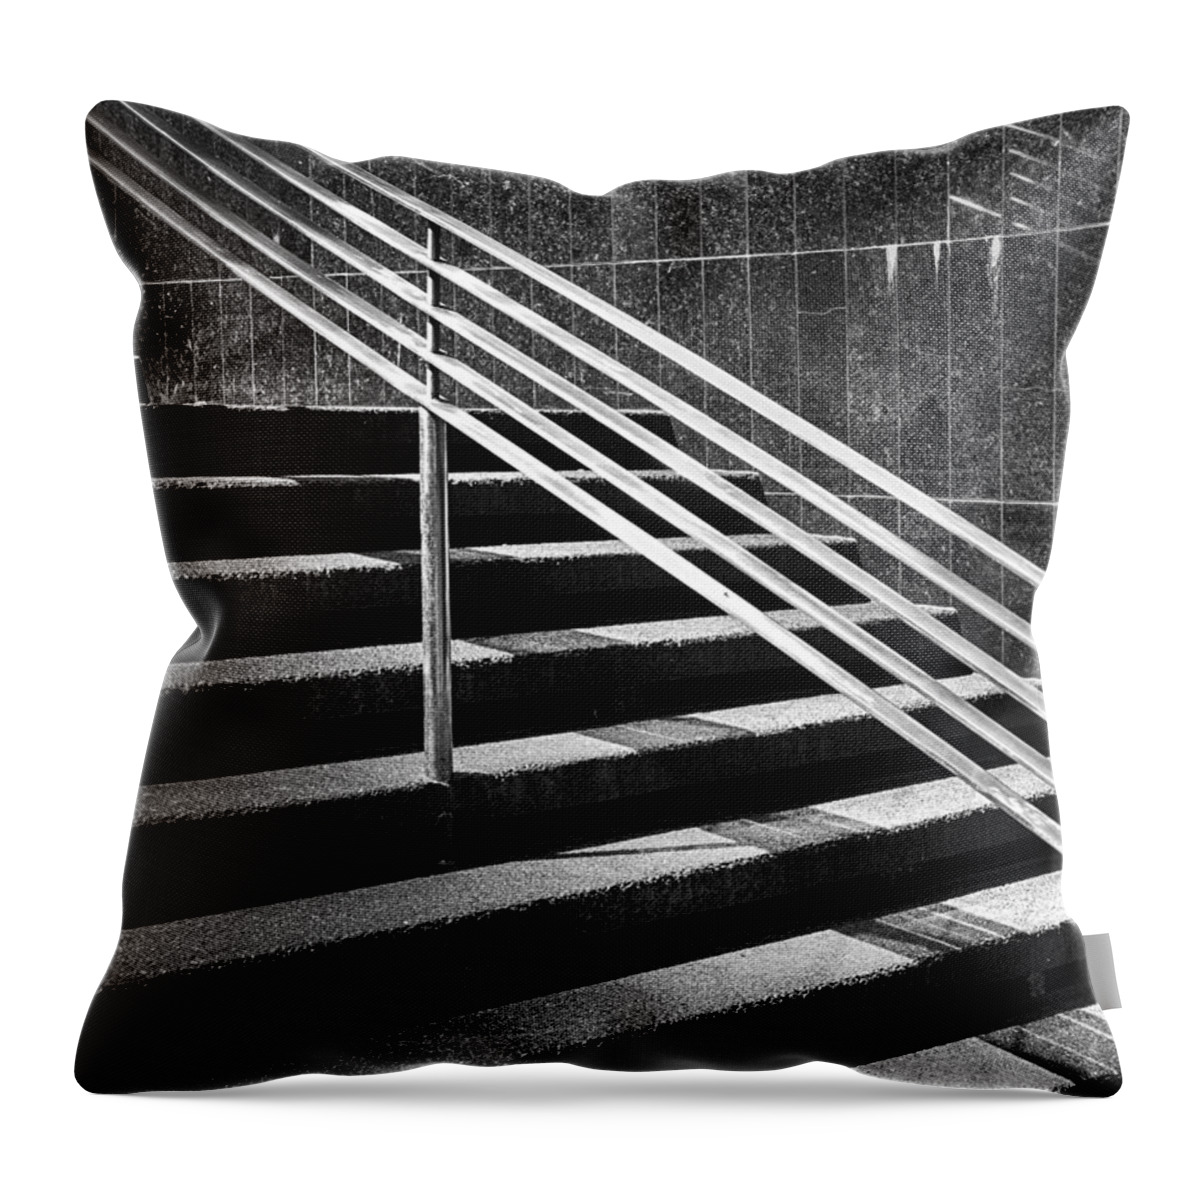 Theresa Tahara Throw Pillow featuring the photograph Stairs by Theresa Tahara